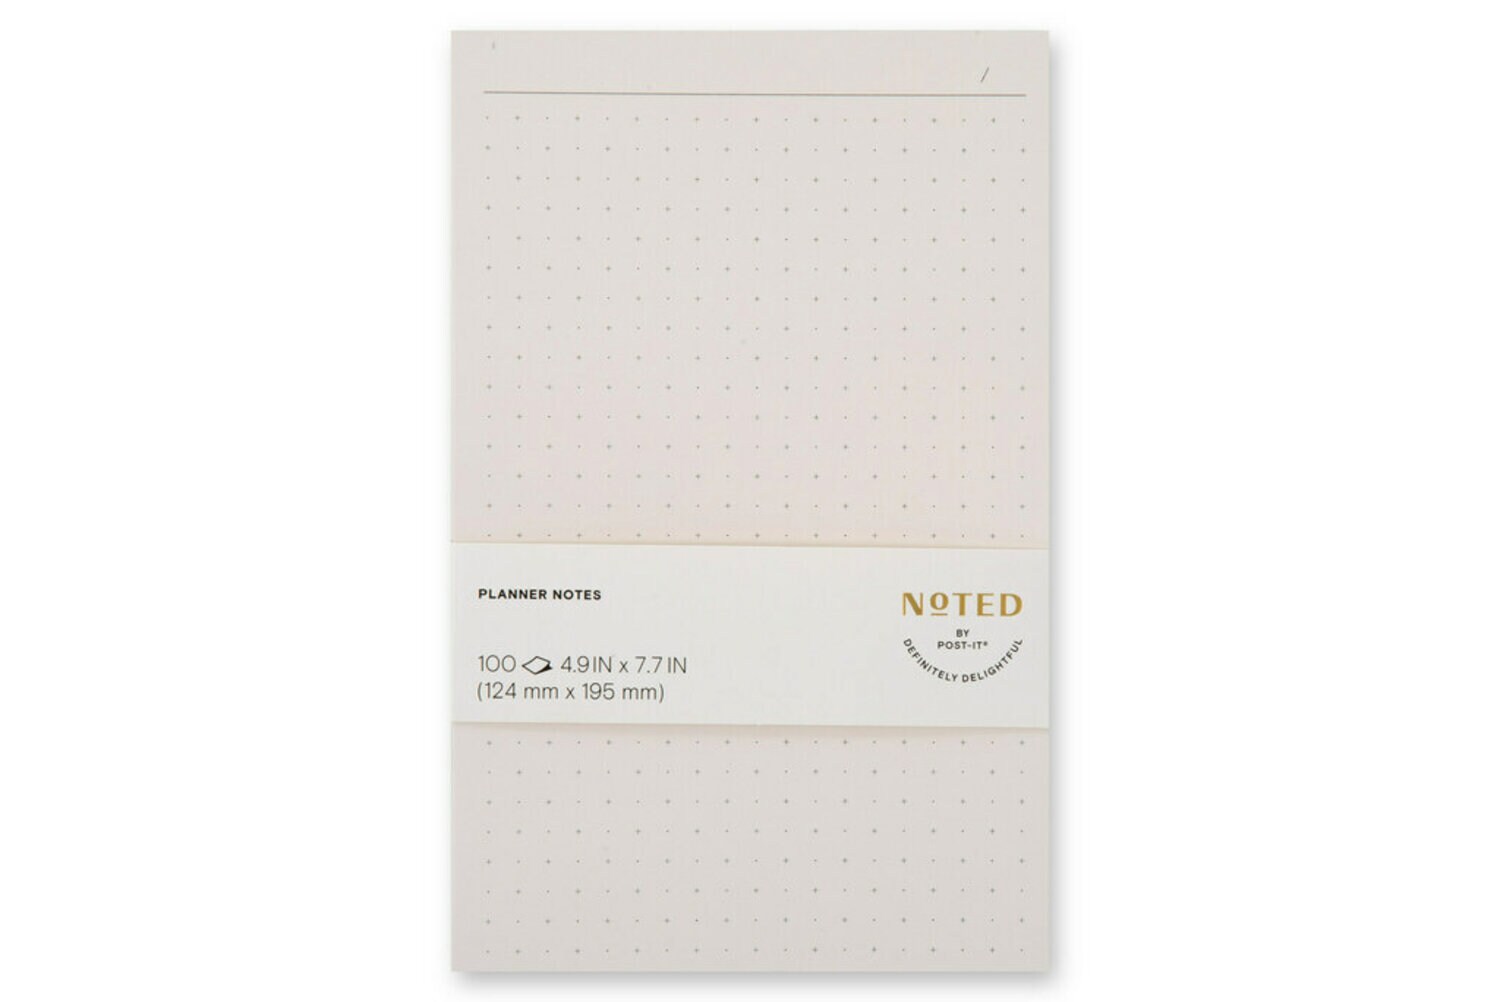 7100256693 - Post-it Planner Notes NTD-58-GRID, 4.9 in x 7.7 in (124 mm x 195 mm)